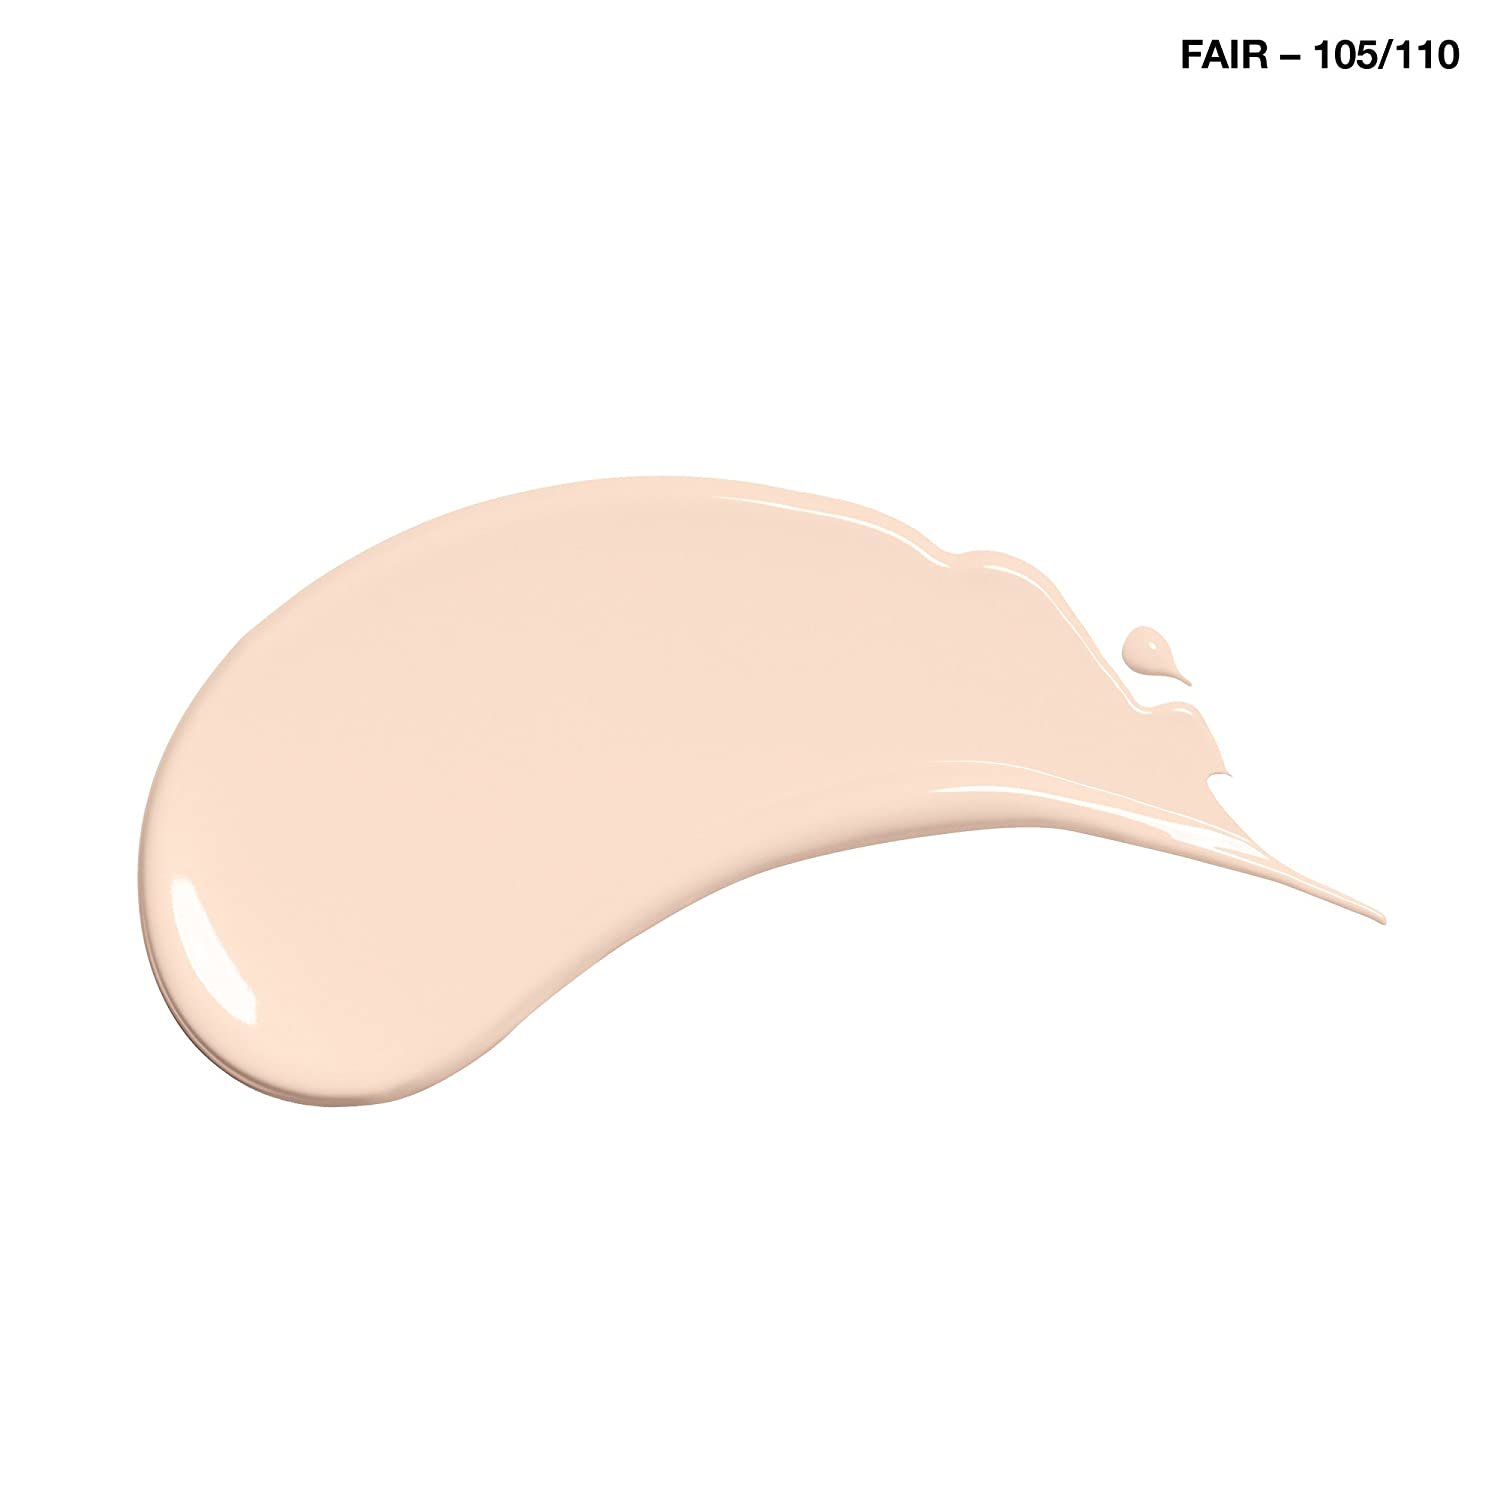 COVERGIRL Clean Matte Concealer, 110 Fair, 0.32 fl oz, Full Coverage, Skin-Brightening - image 4 of 6